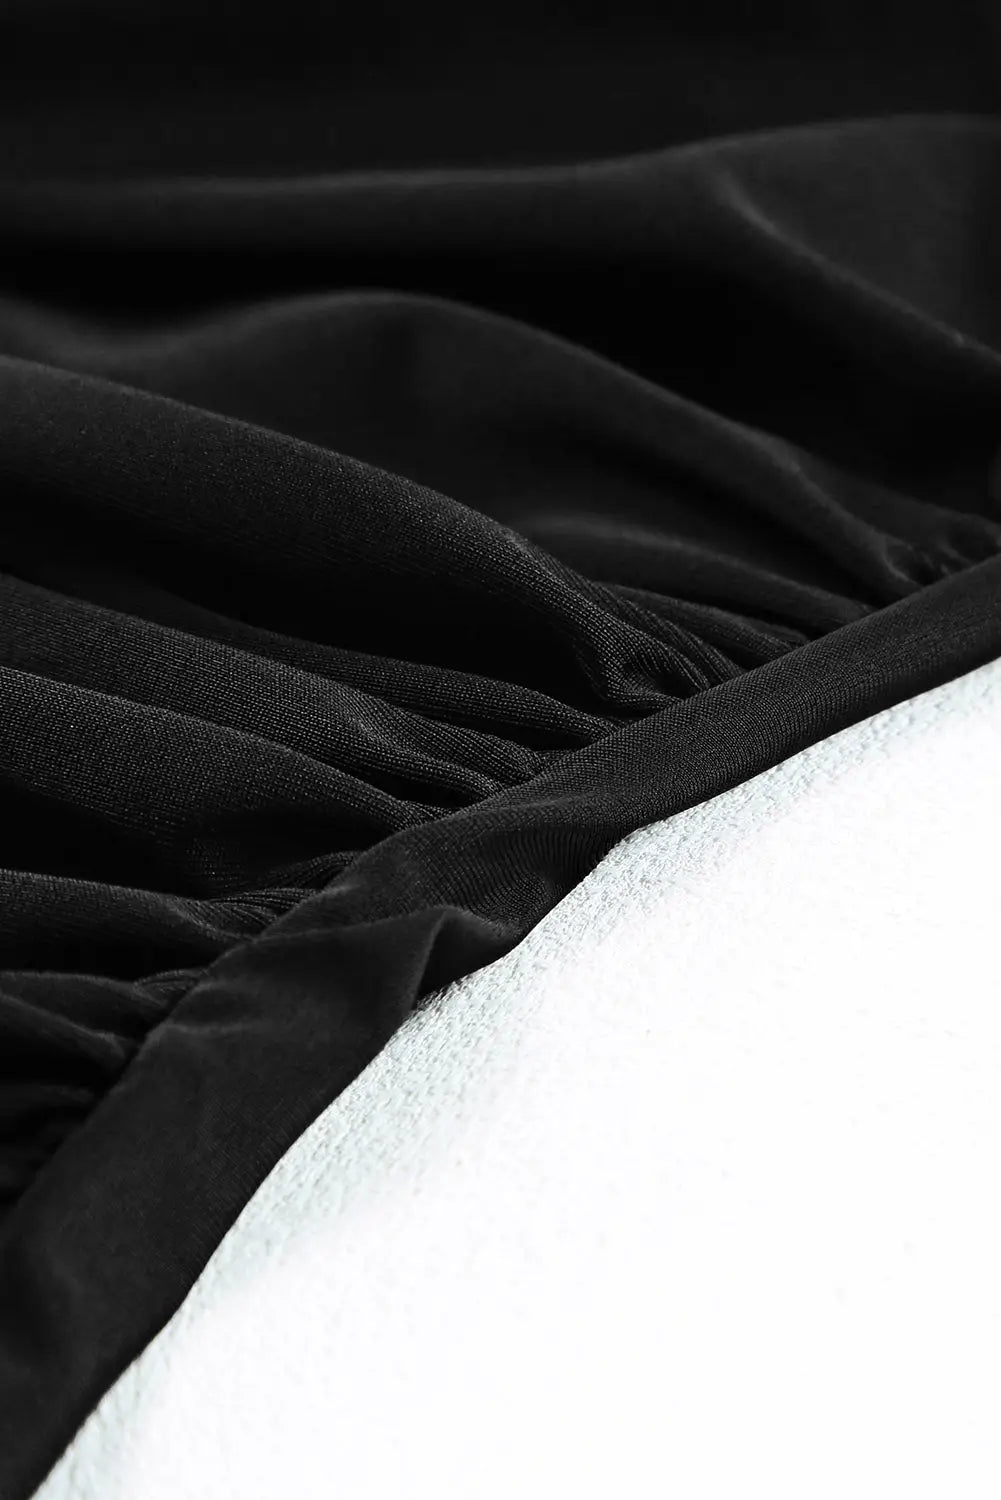 Black solid square neck sleeveless tankini swimsuit - tankinis